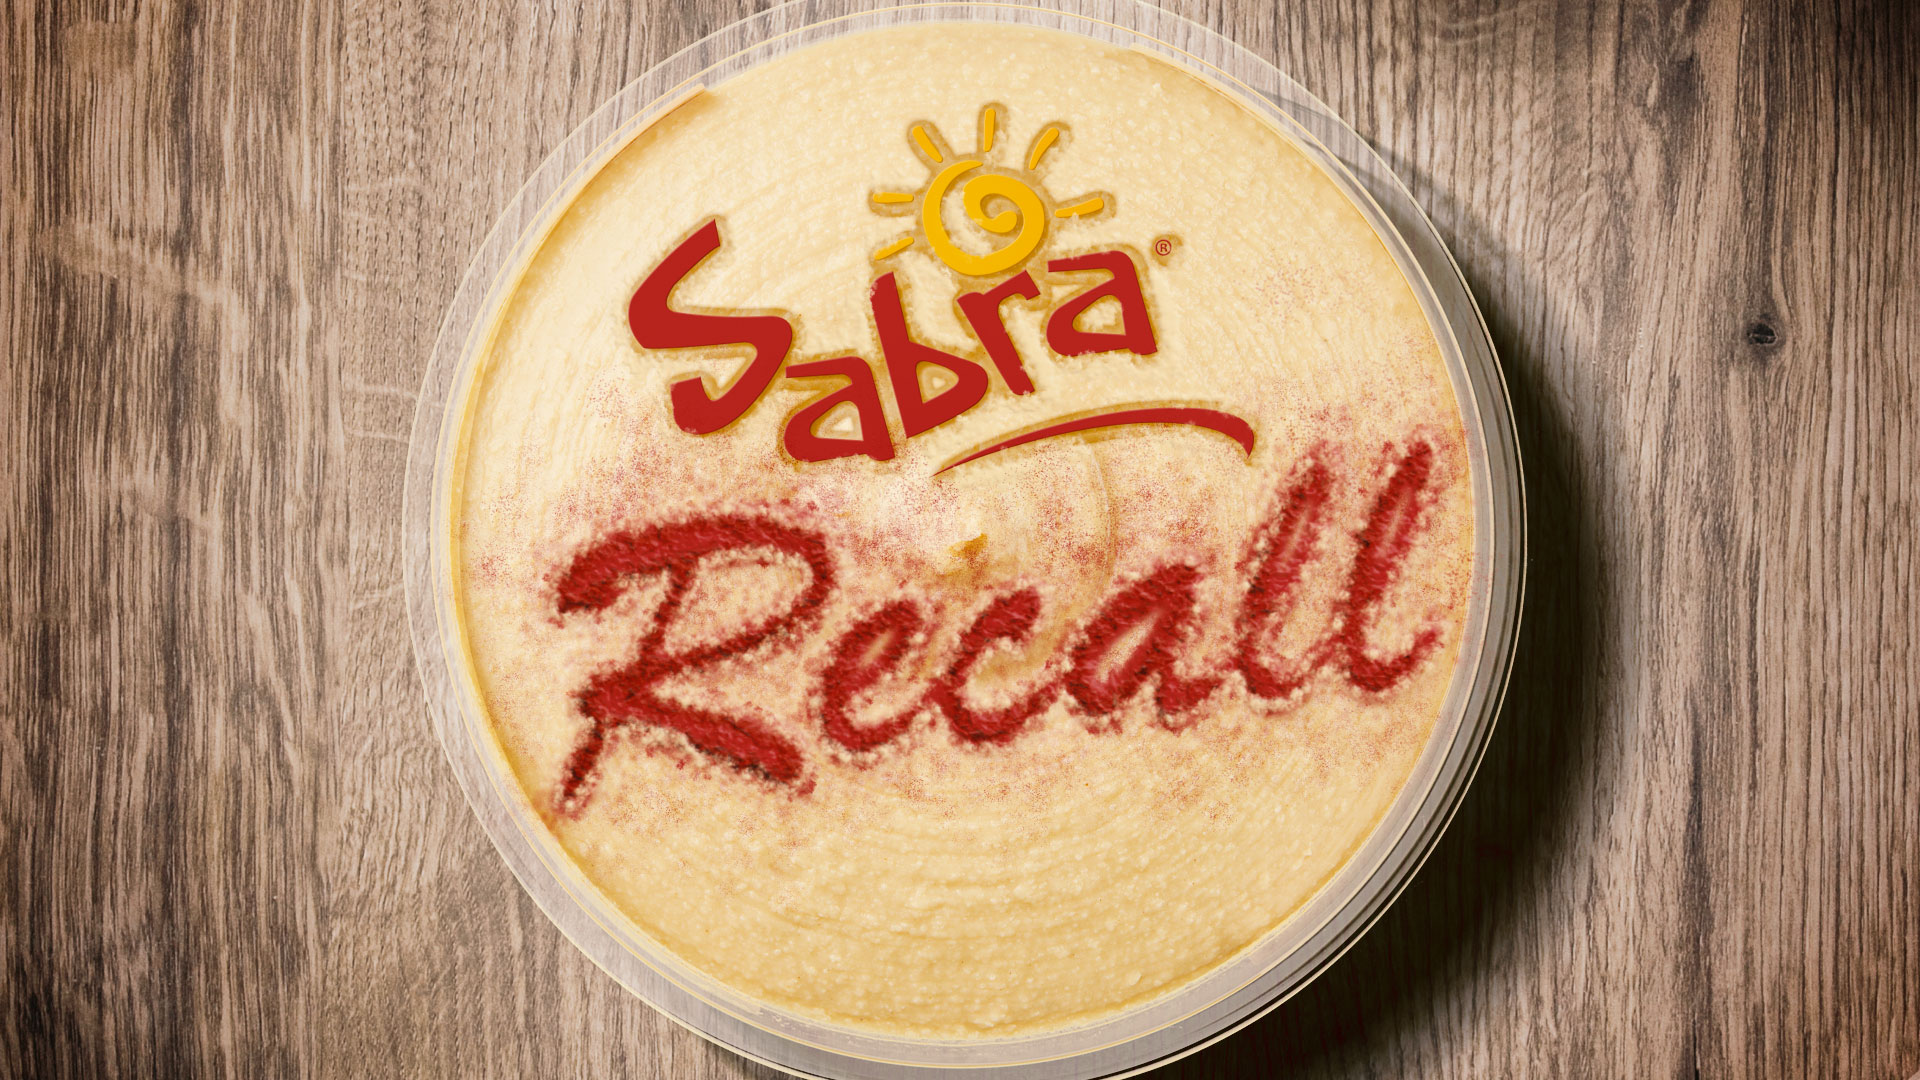 Sabra-Recall-112116-cc